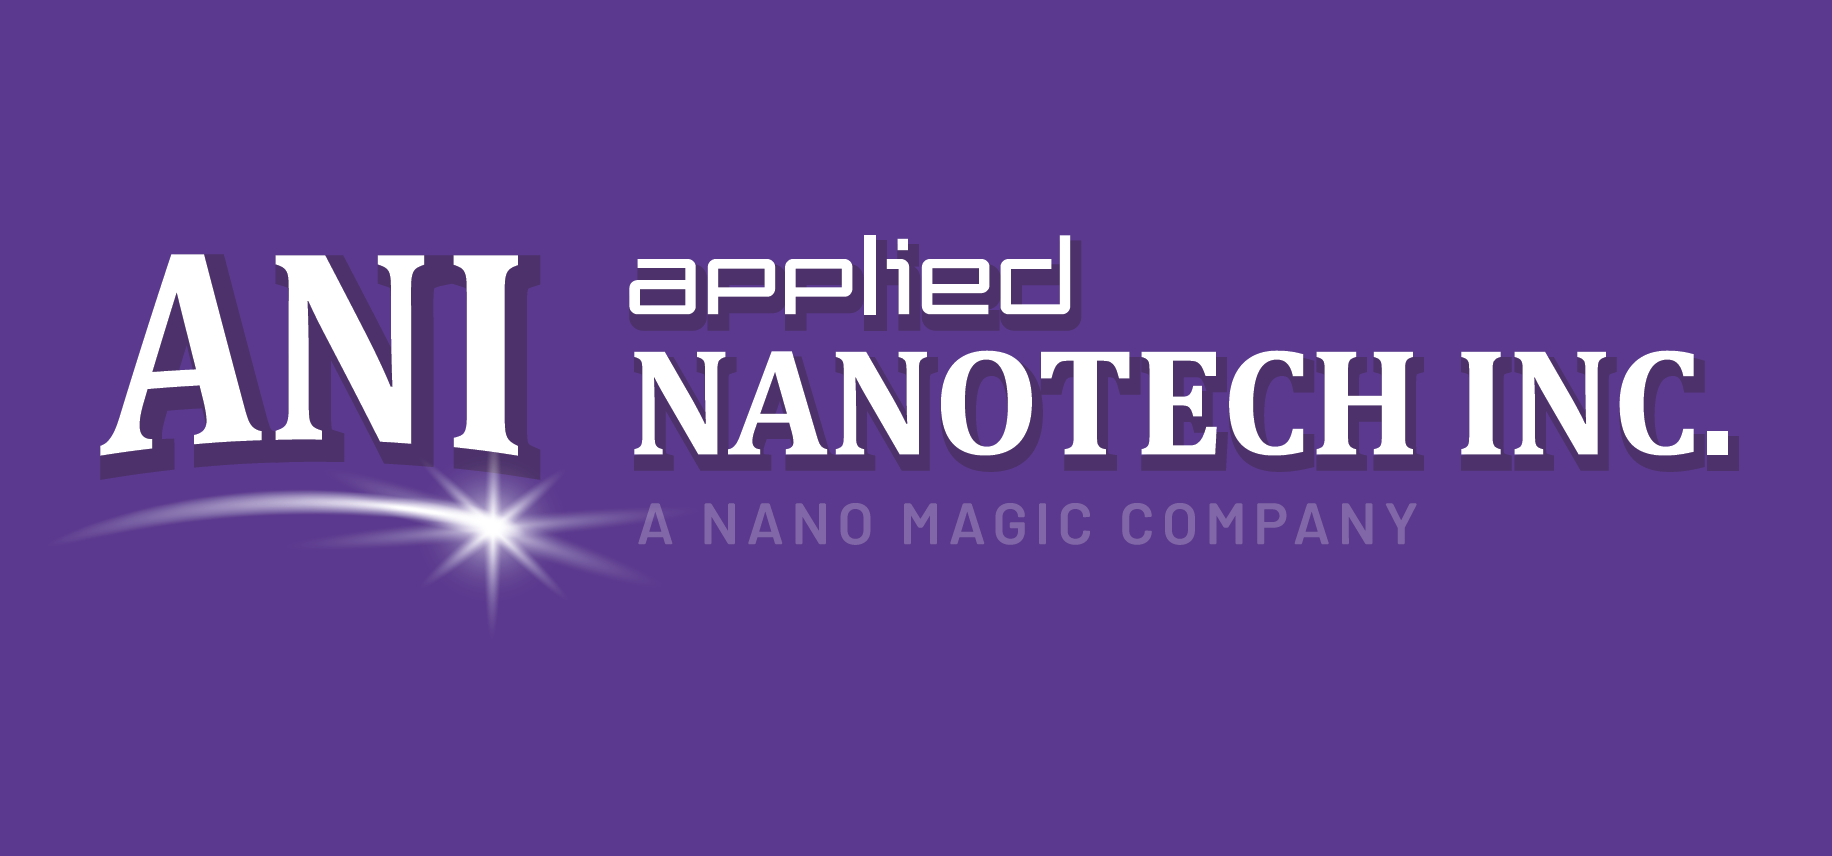 Applied Nanotech, Inc. Logo